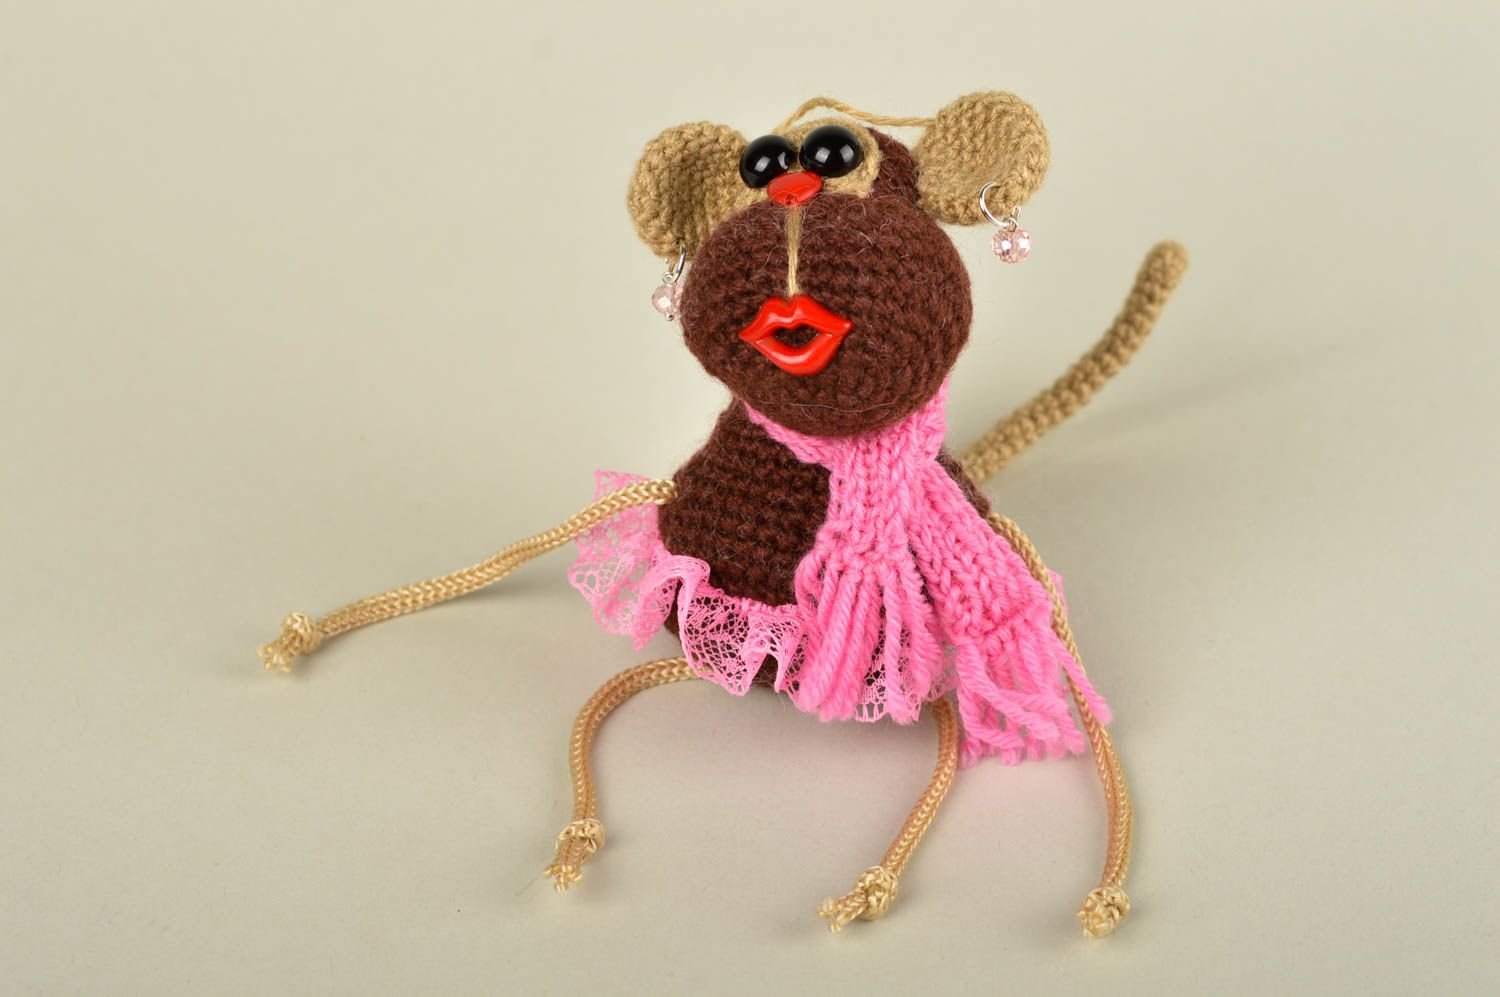 Hand-crocheted creative toy handmade stylish toy for babies nursery decor photo 5